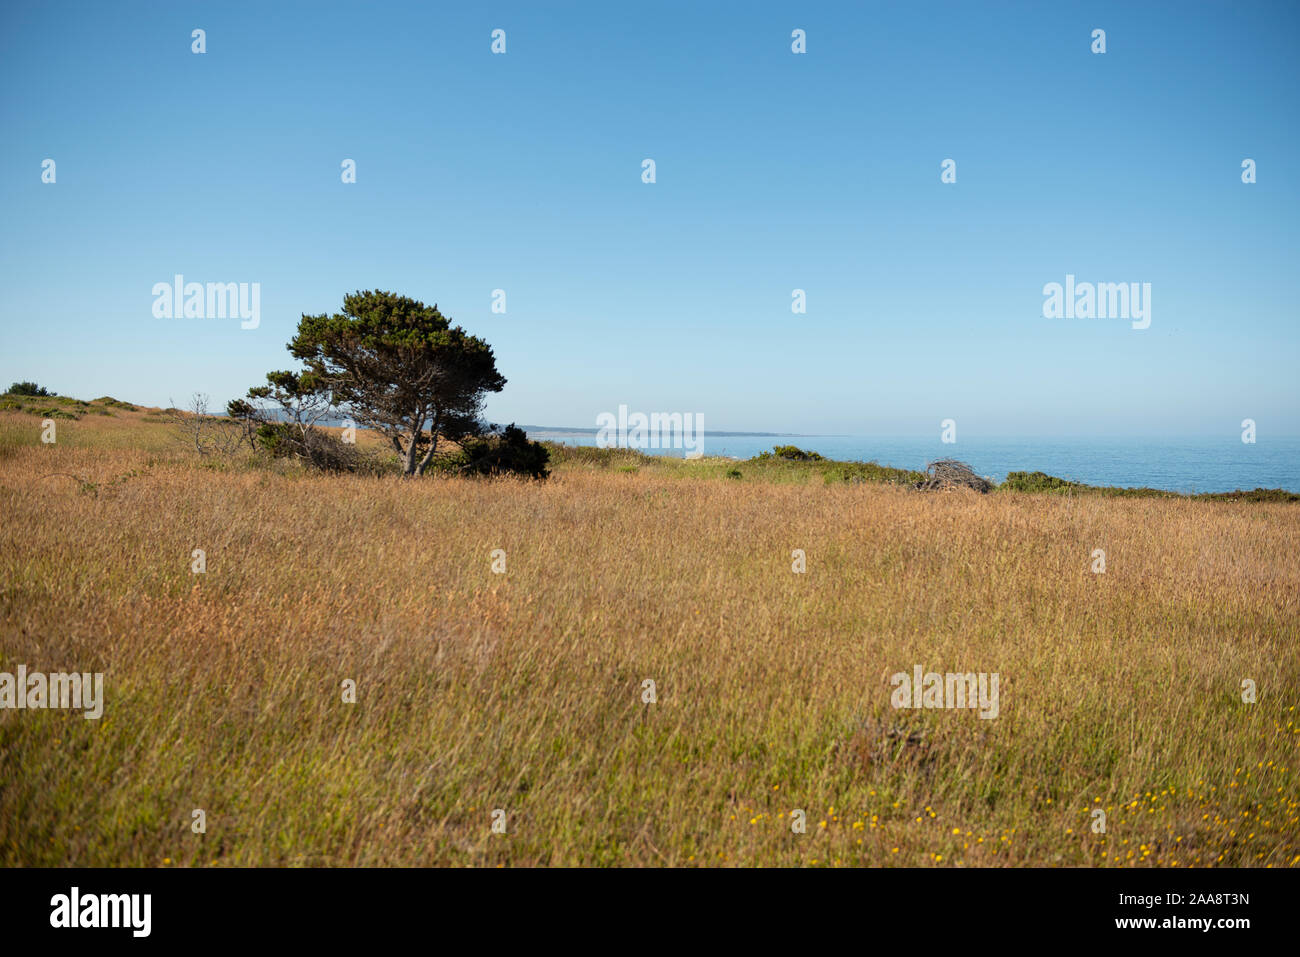 Single pine tree in grasslands along California coast cliffs Stock Photo